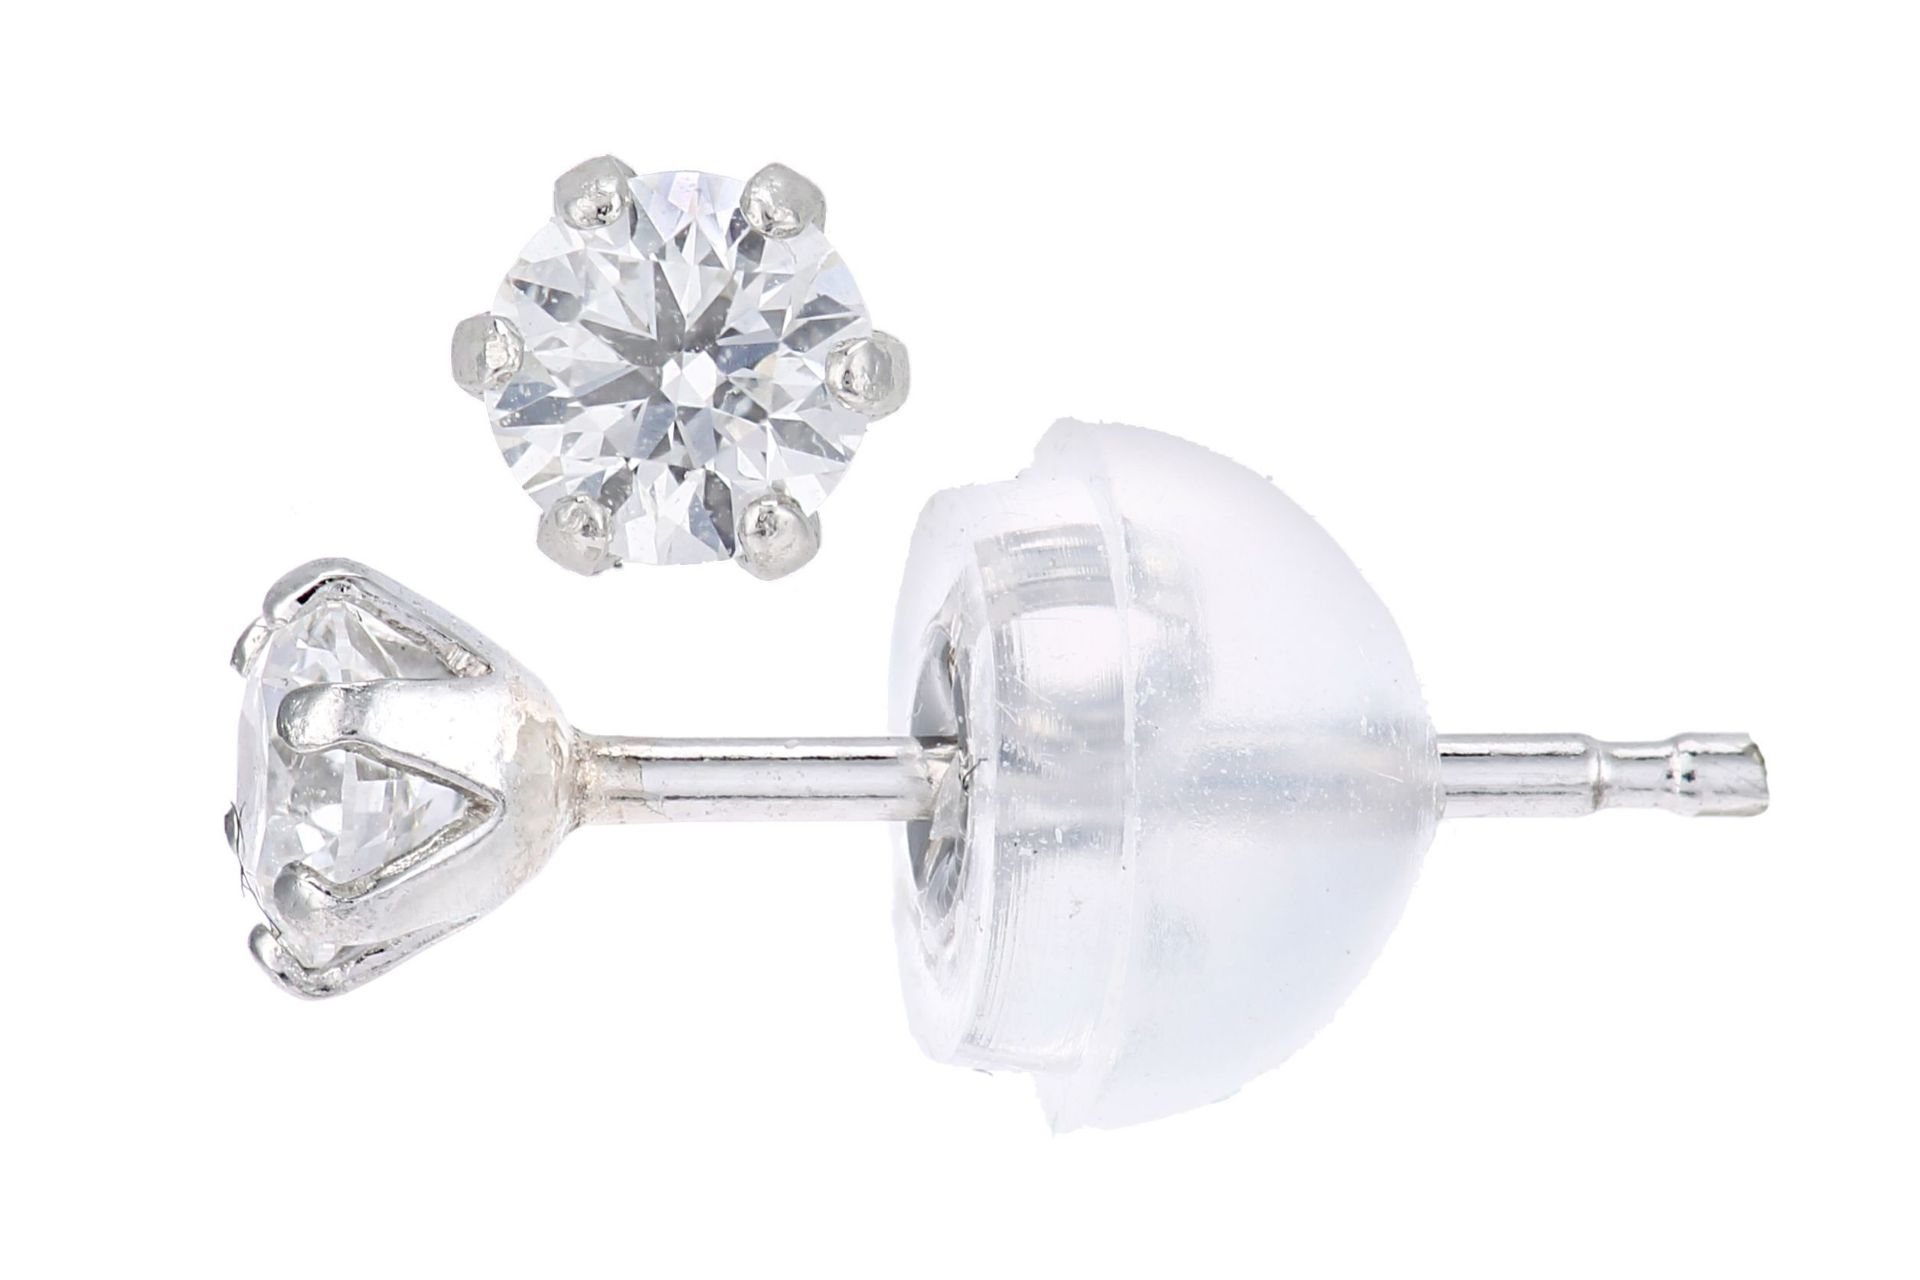 Platinum diamond earrings RRP £440 (m-43204/lc9w)